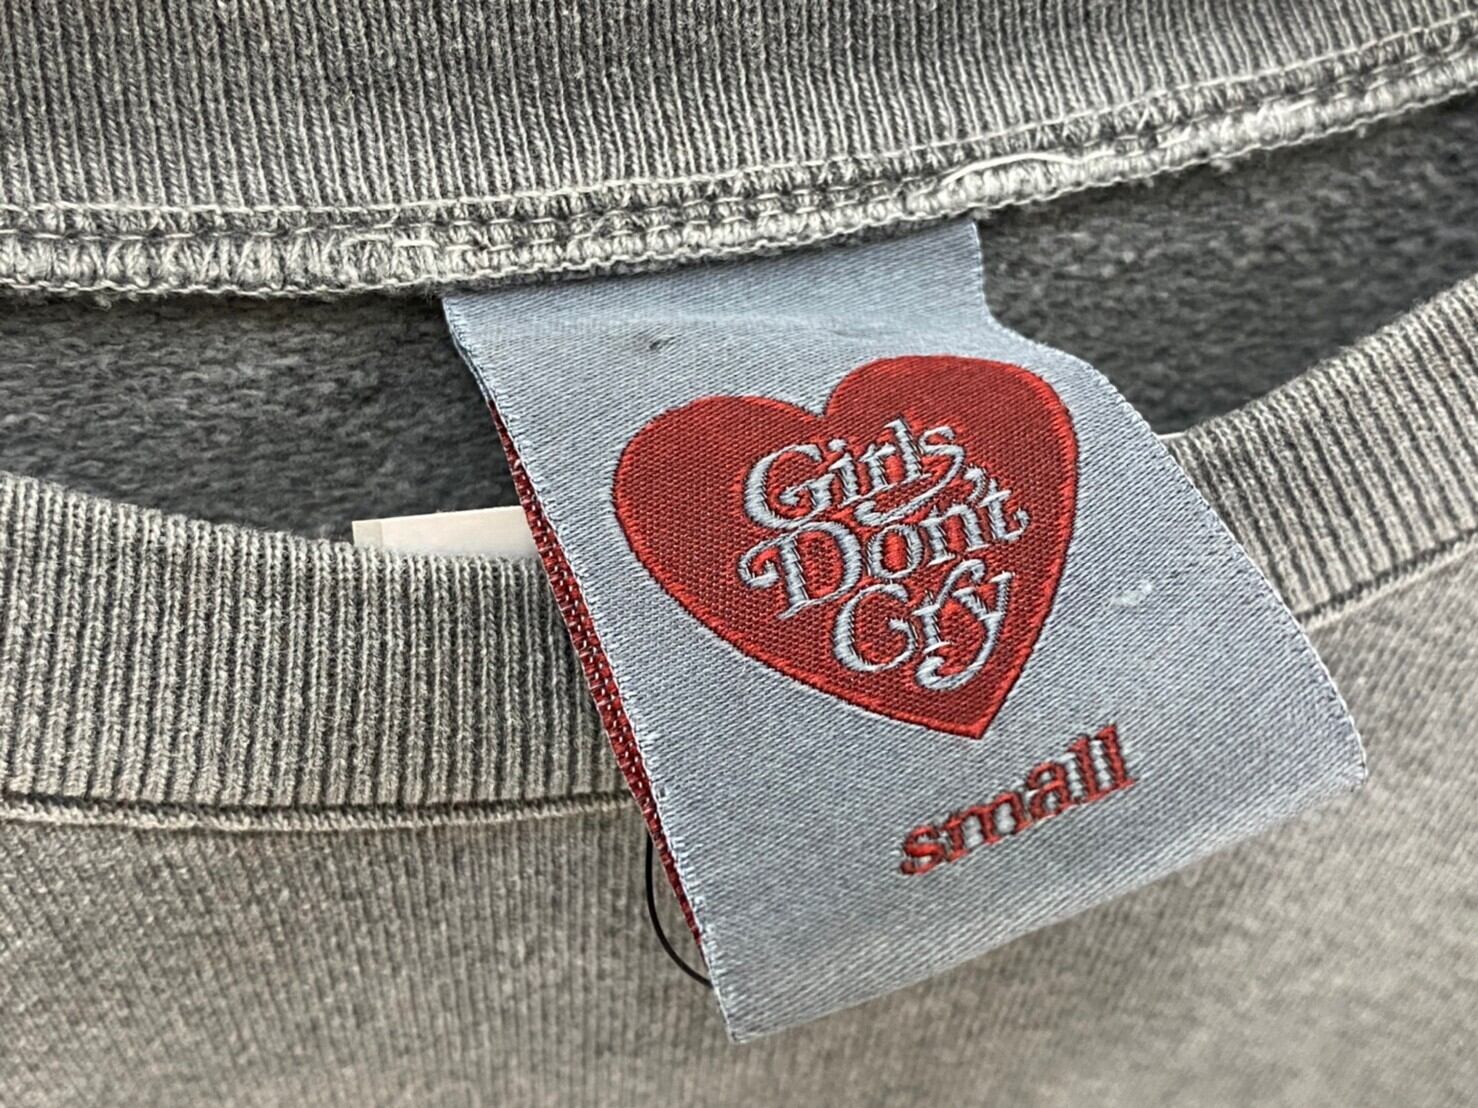 Girls don’t cry grey sweatshirt